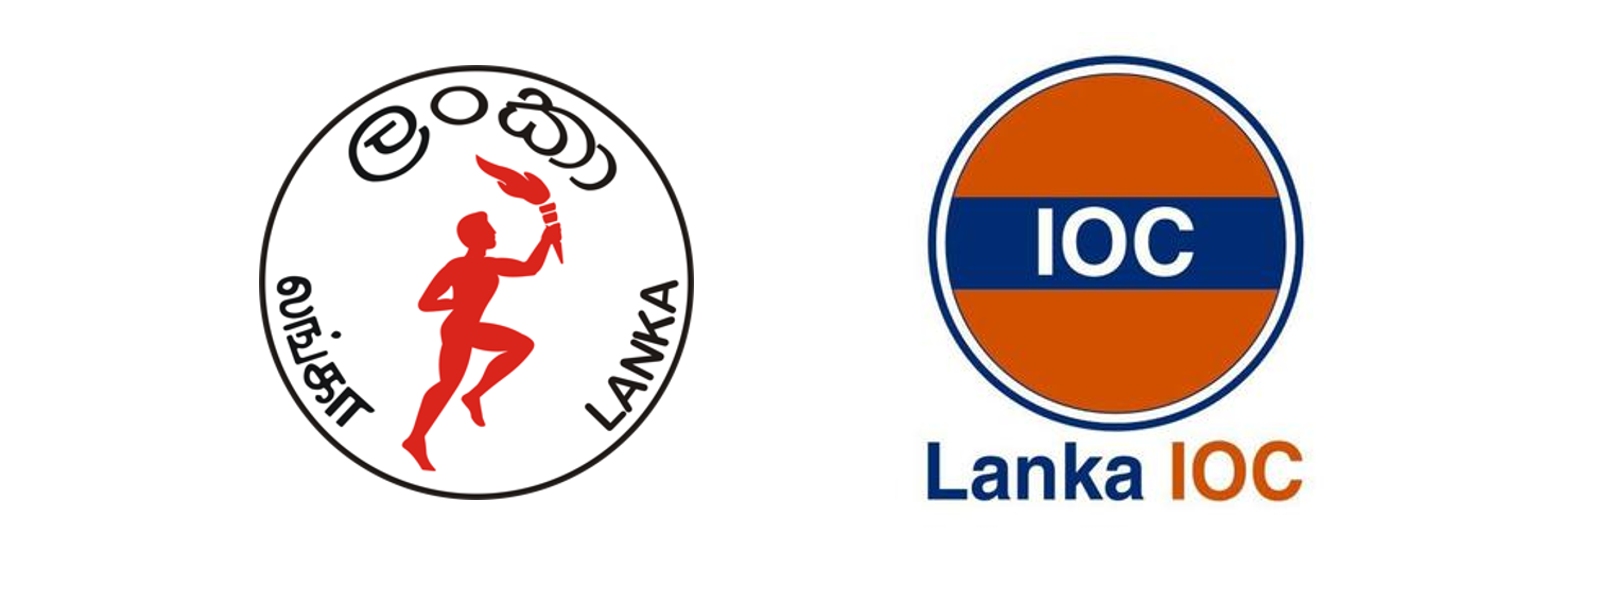 Lanka IOC & CPC to follow common fuel price formula; New Energy Minister tells Parliament